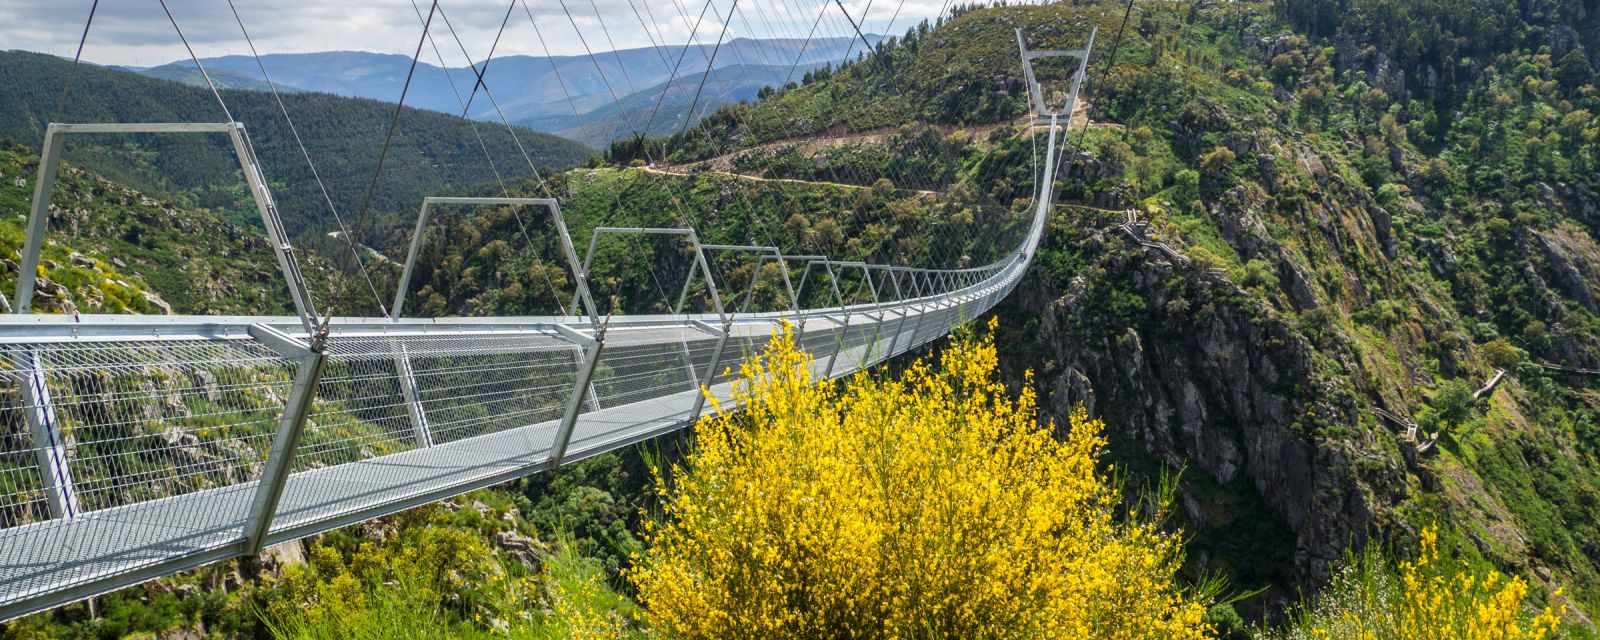 Arouca 516 - One of the Longest Footbridges in the World